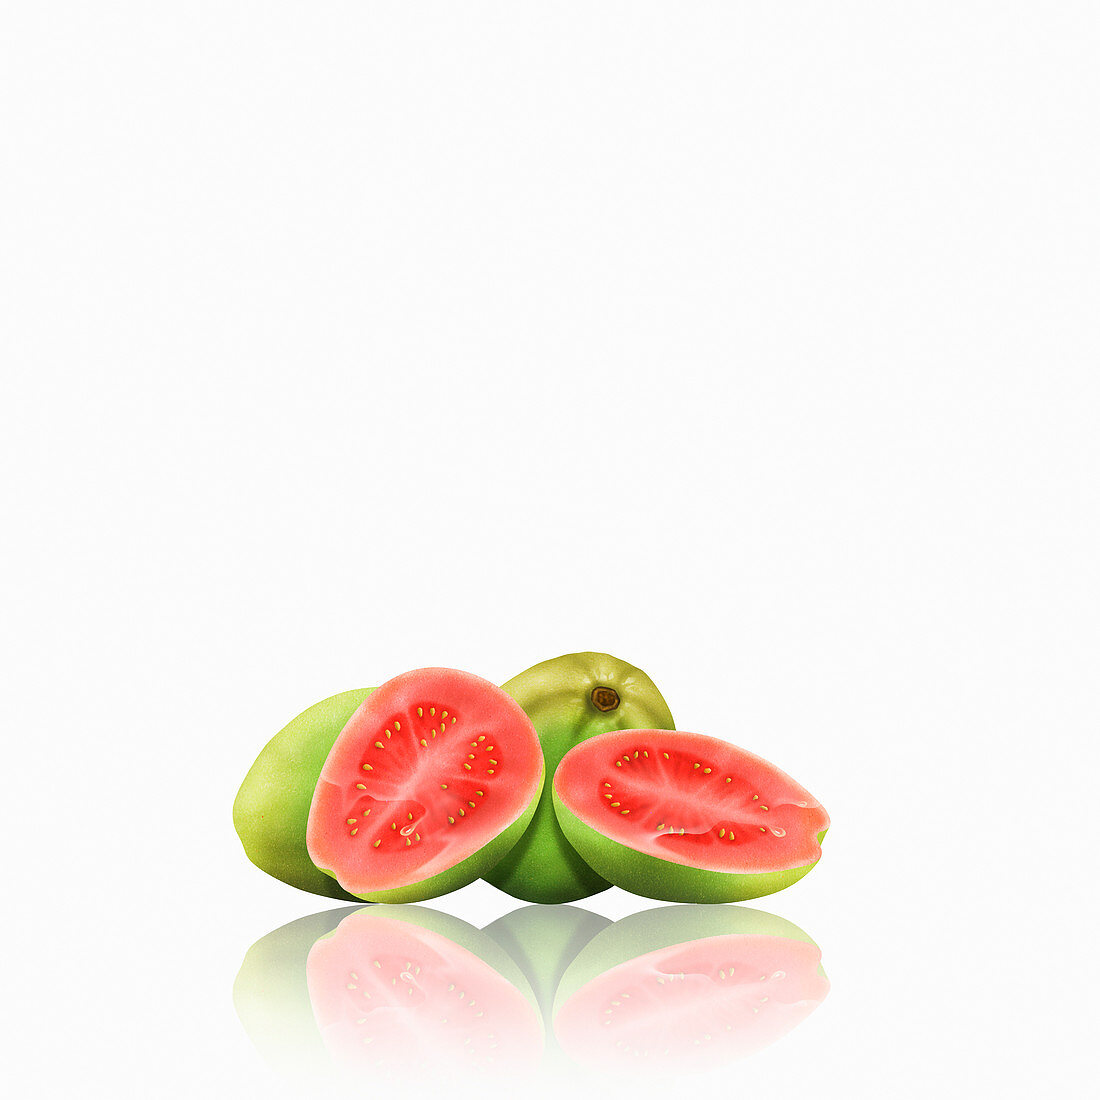 Whole and cut guavas, illustration